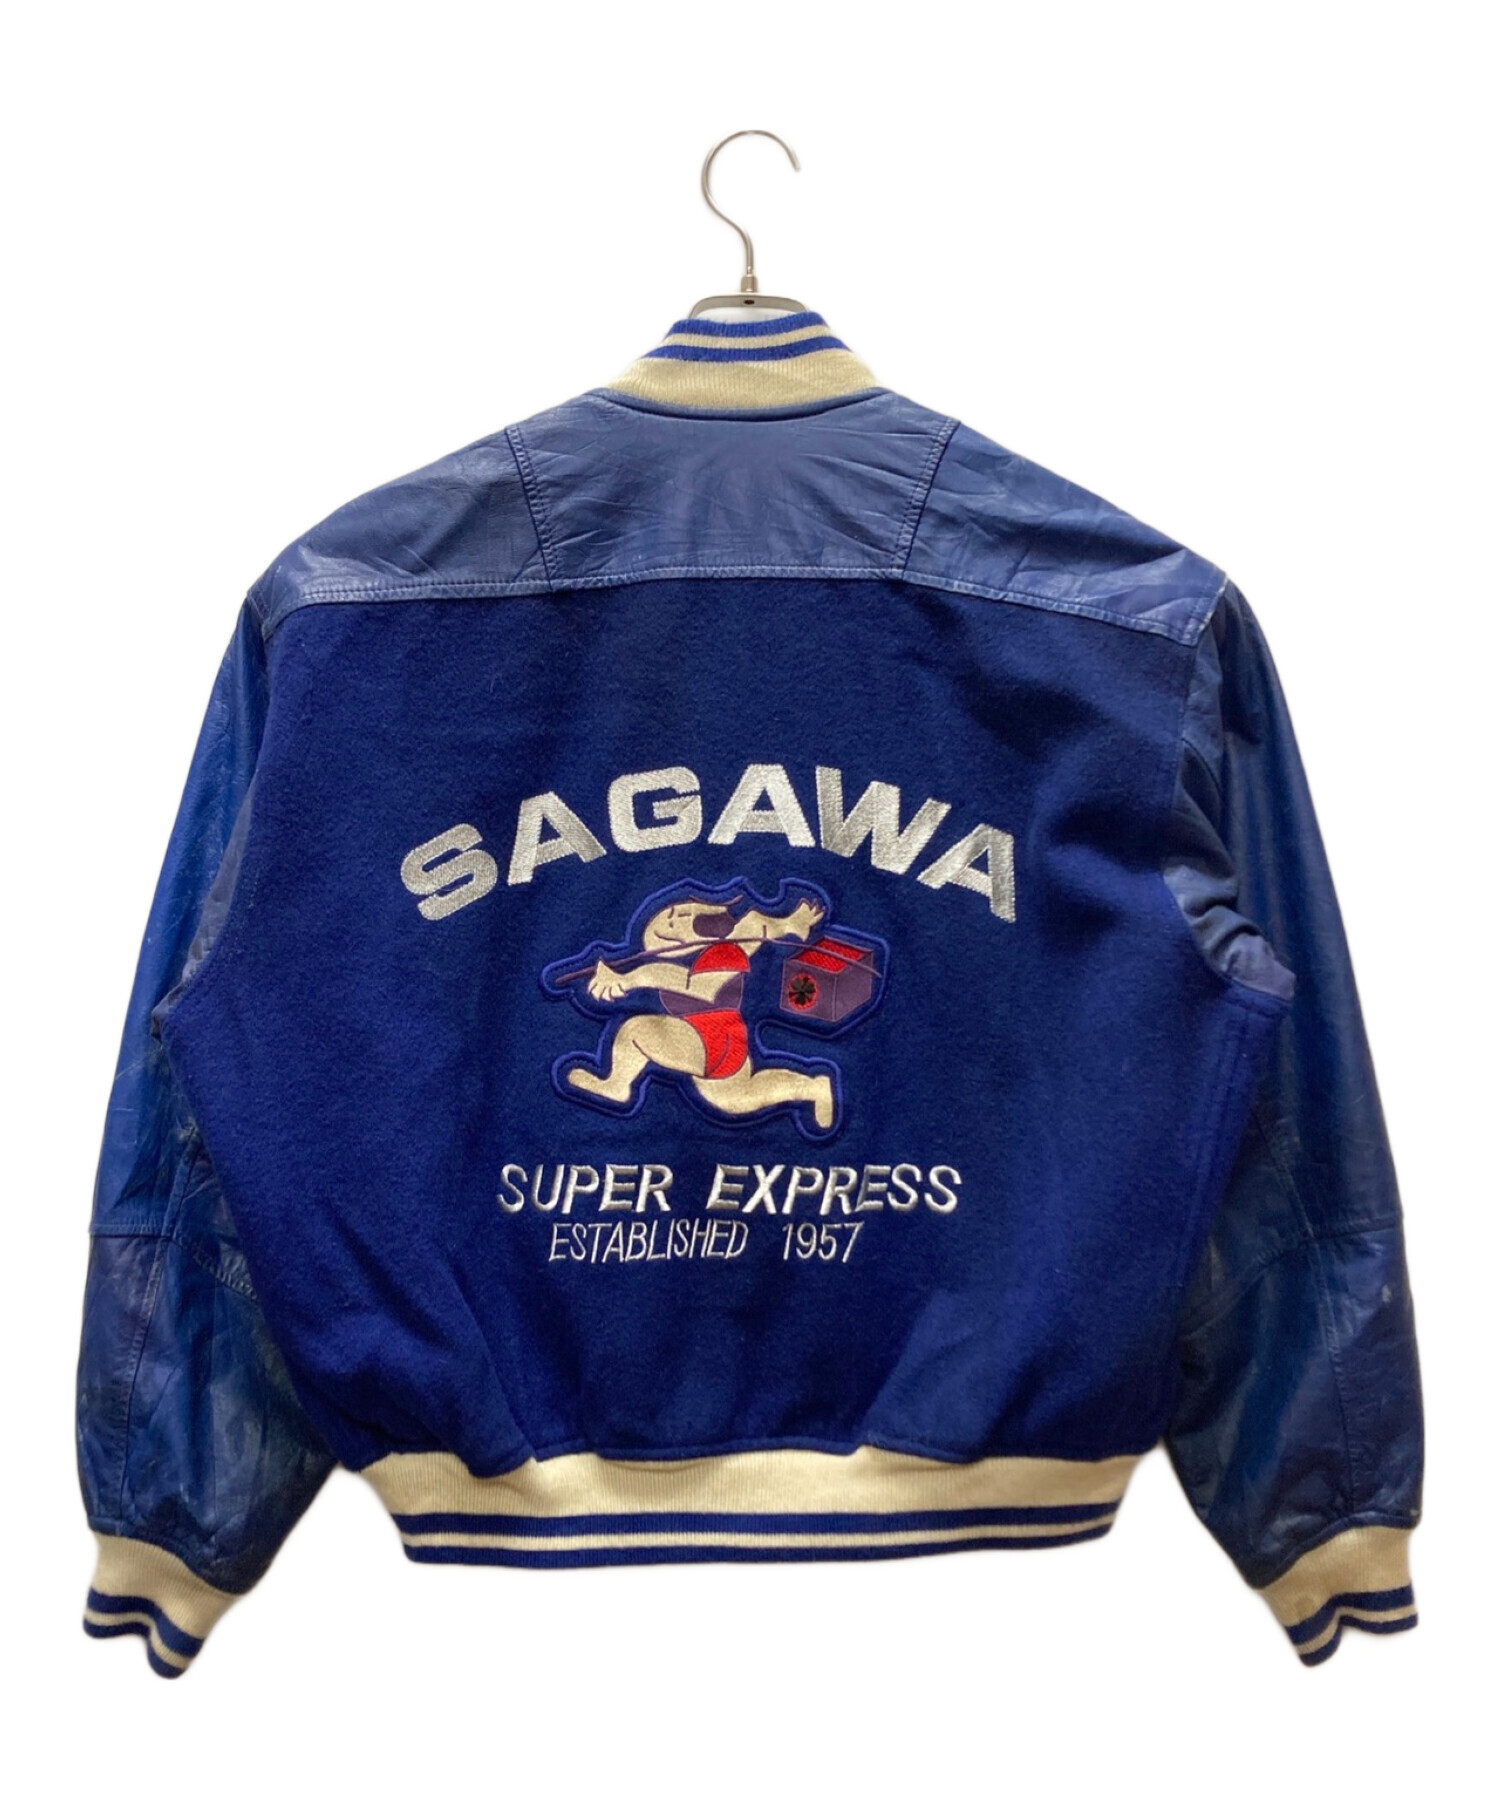 sagawa (サガワ) 切替スタジャン ブルー サイズ:L